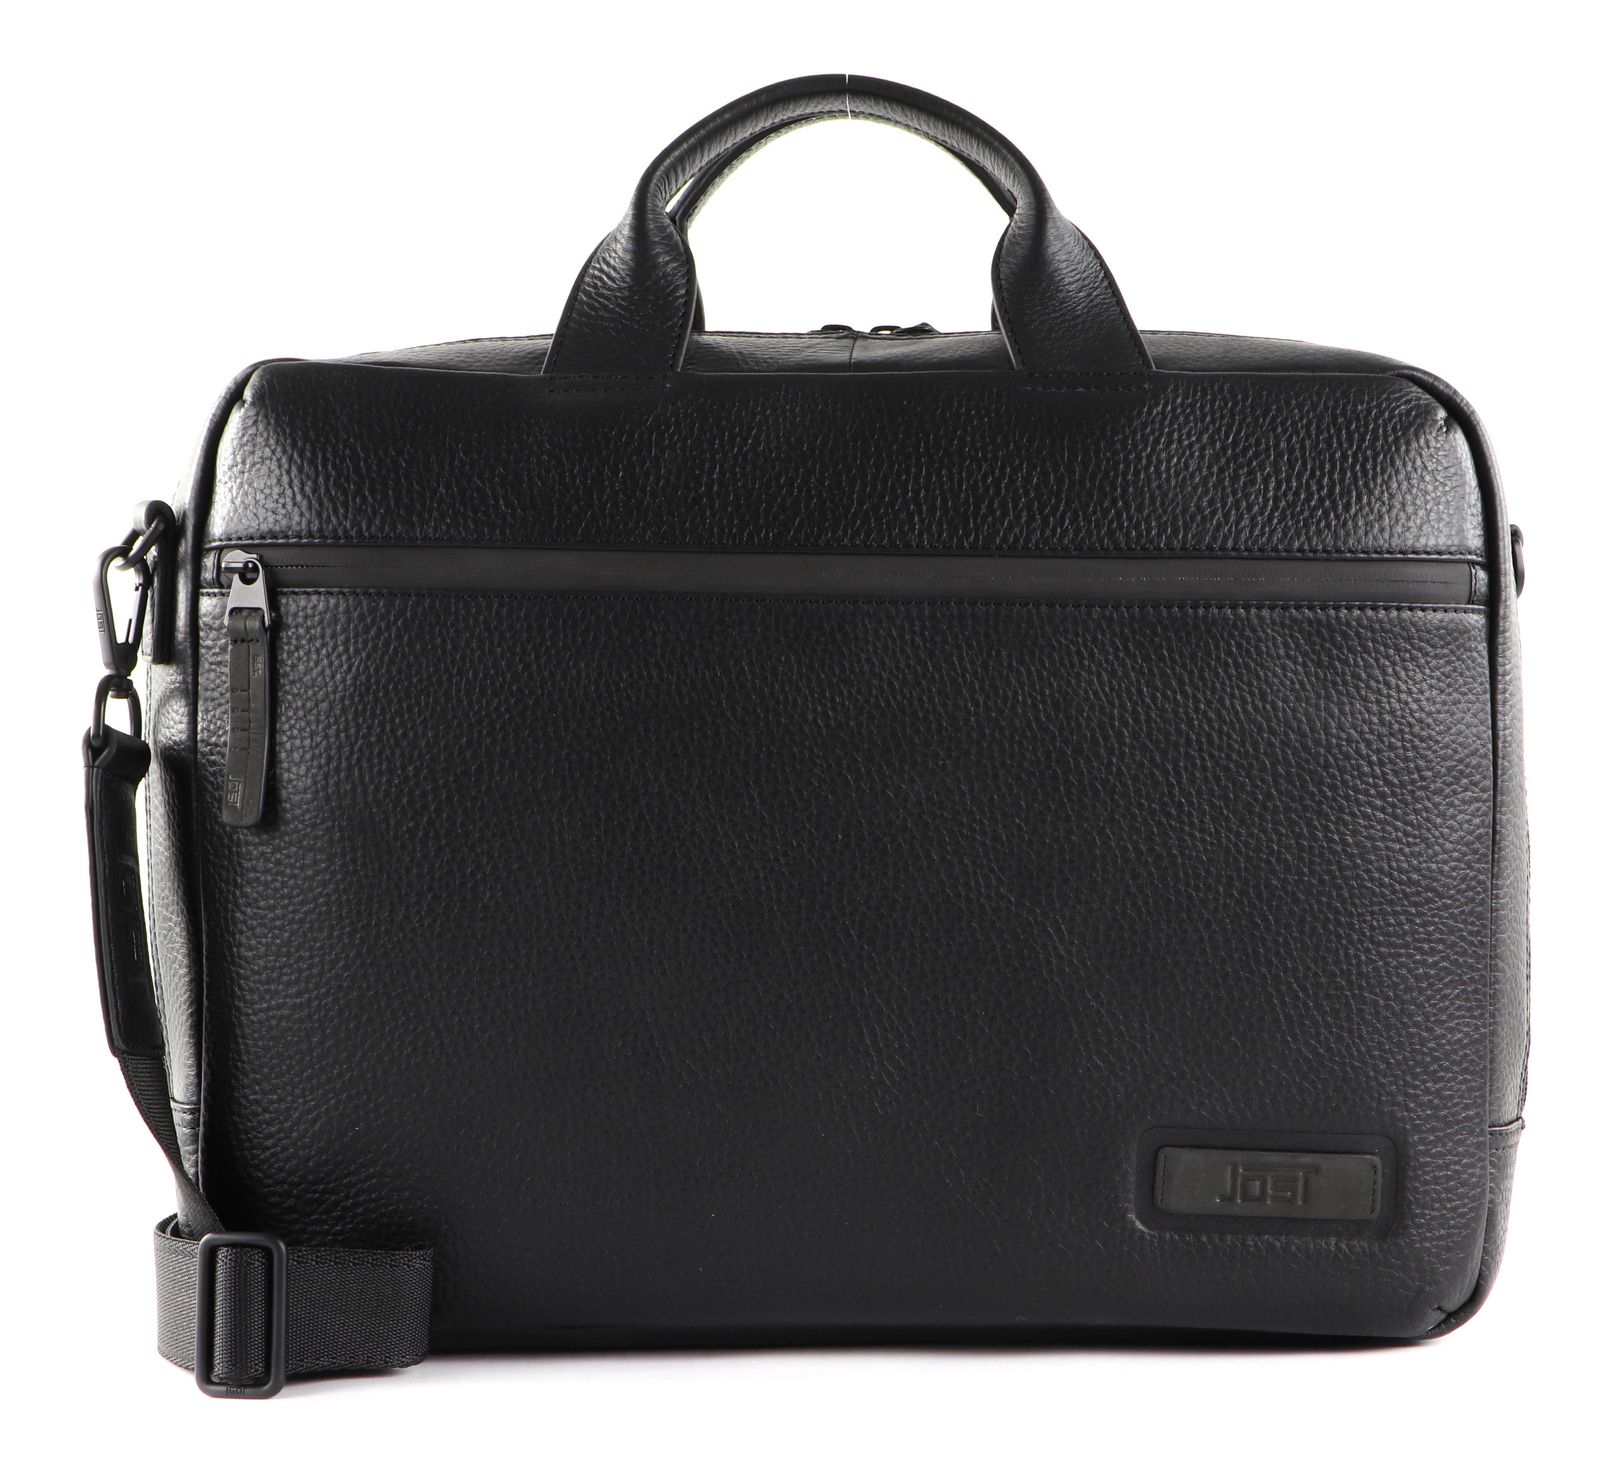 JOST Stockholm Business Bag M Black | Buy bags, purses & accessories ...